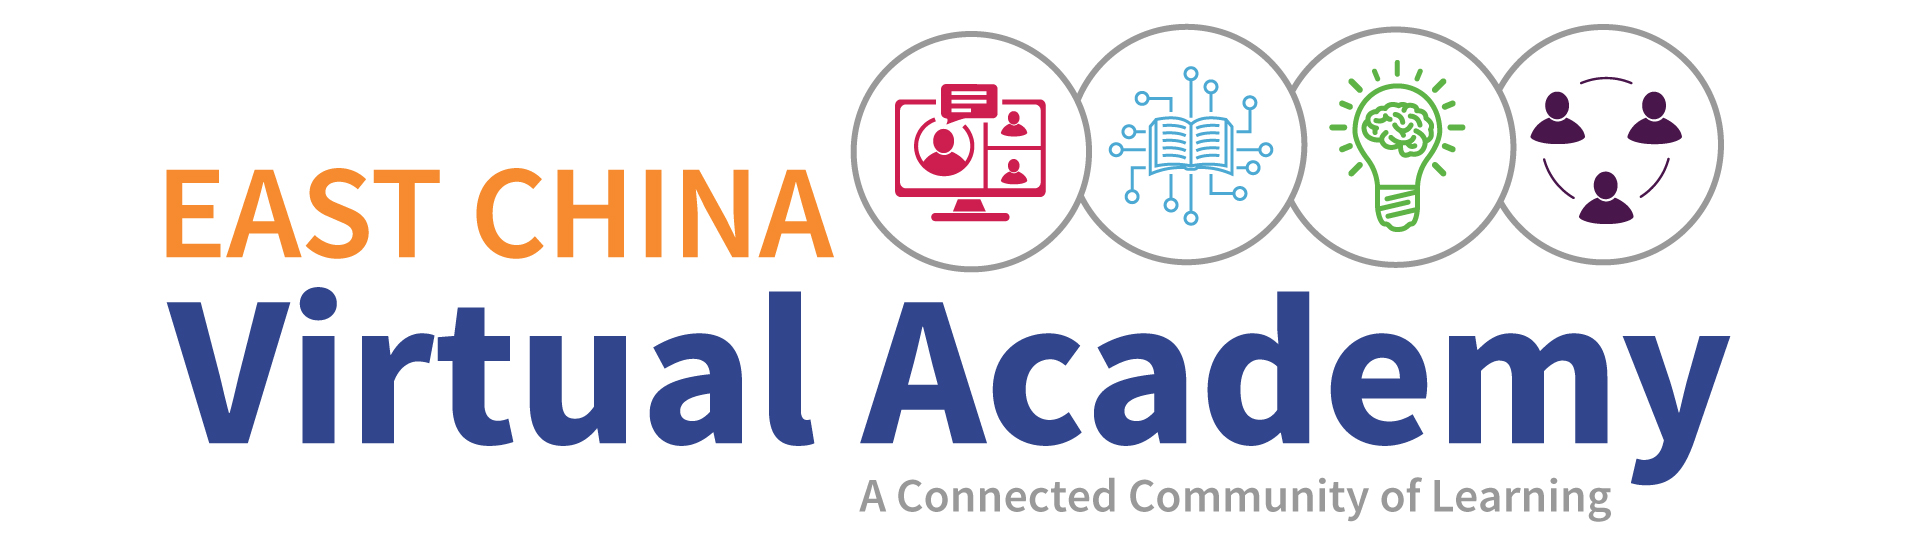 East China Virtual Academy